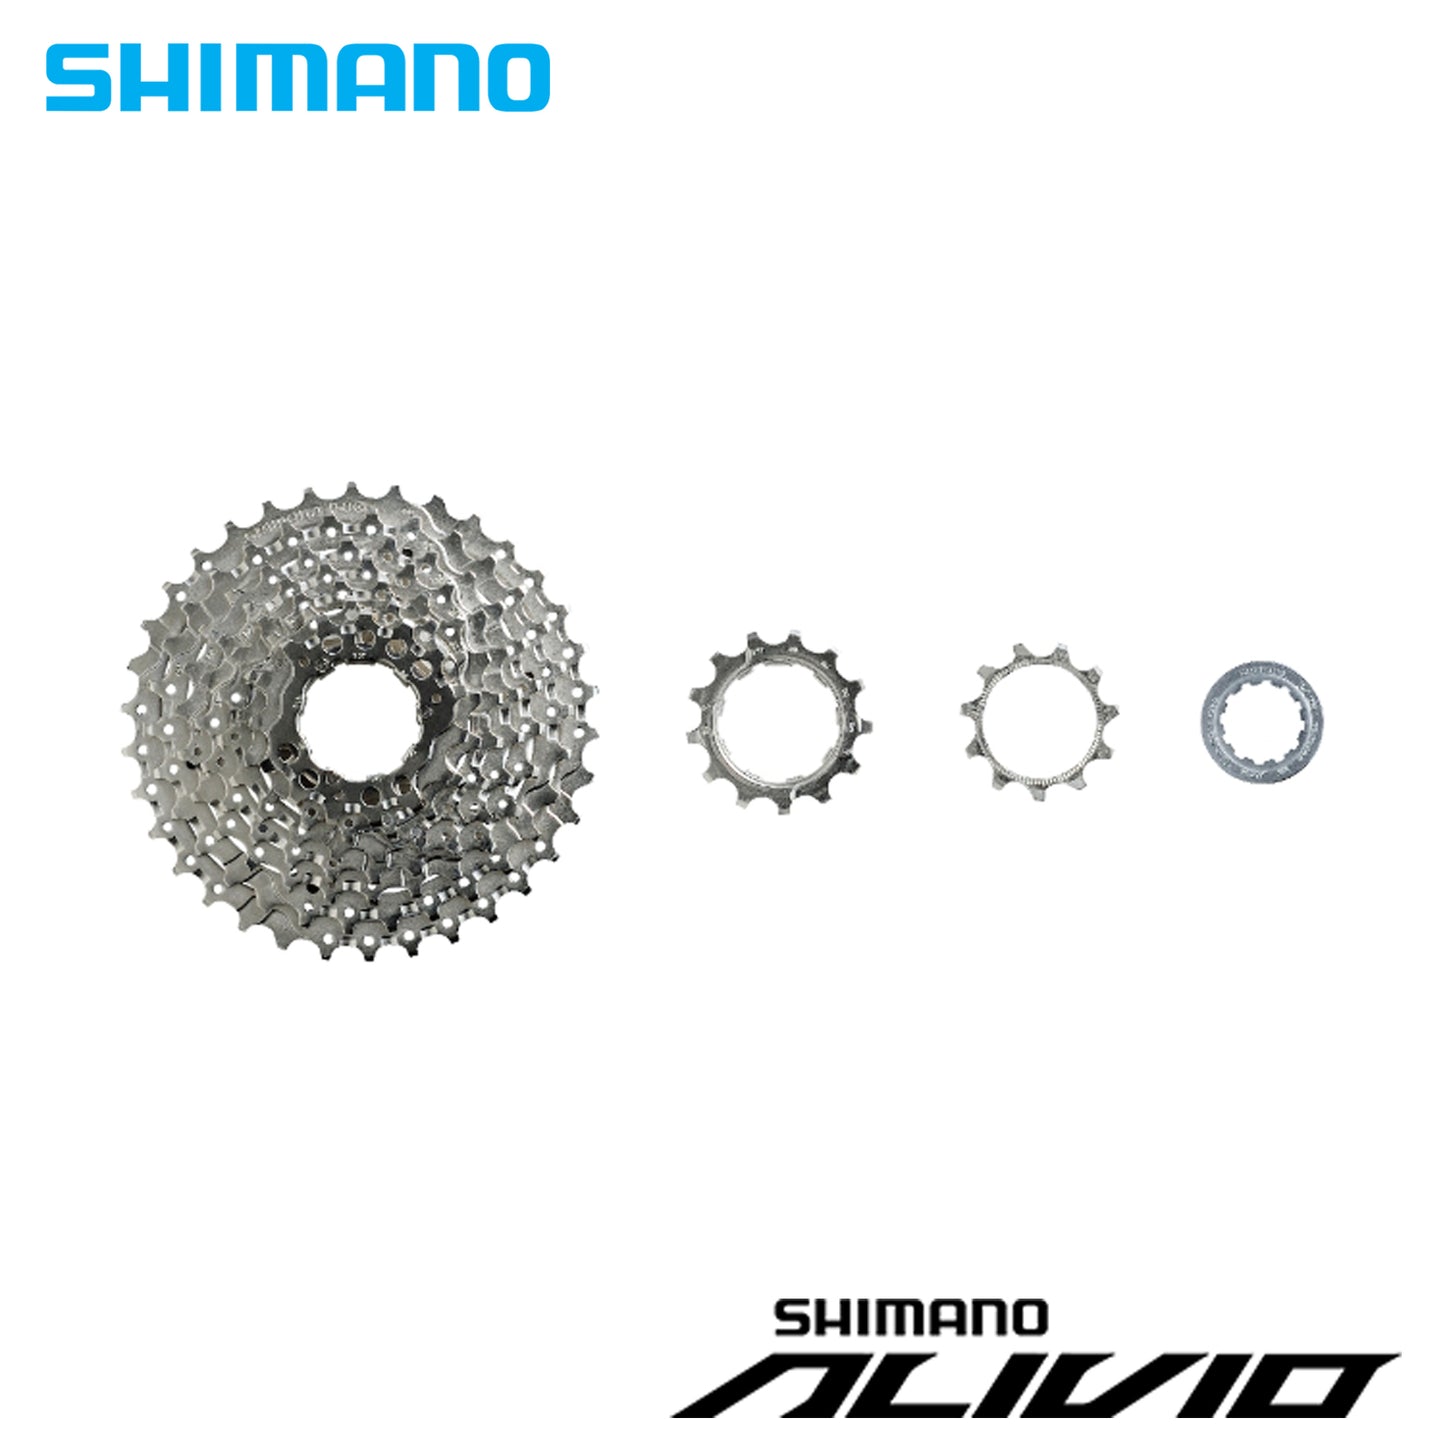 Shimano Alivio M3100 CS-HG400-9 9-Speed - HYPERGLIDE - MTB Cassette Sprocket